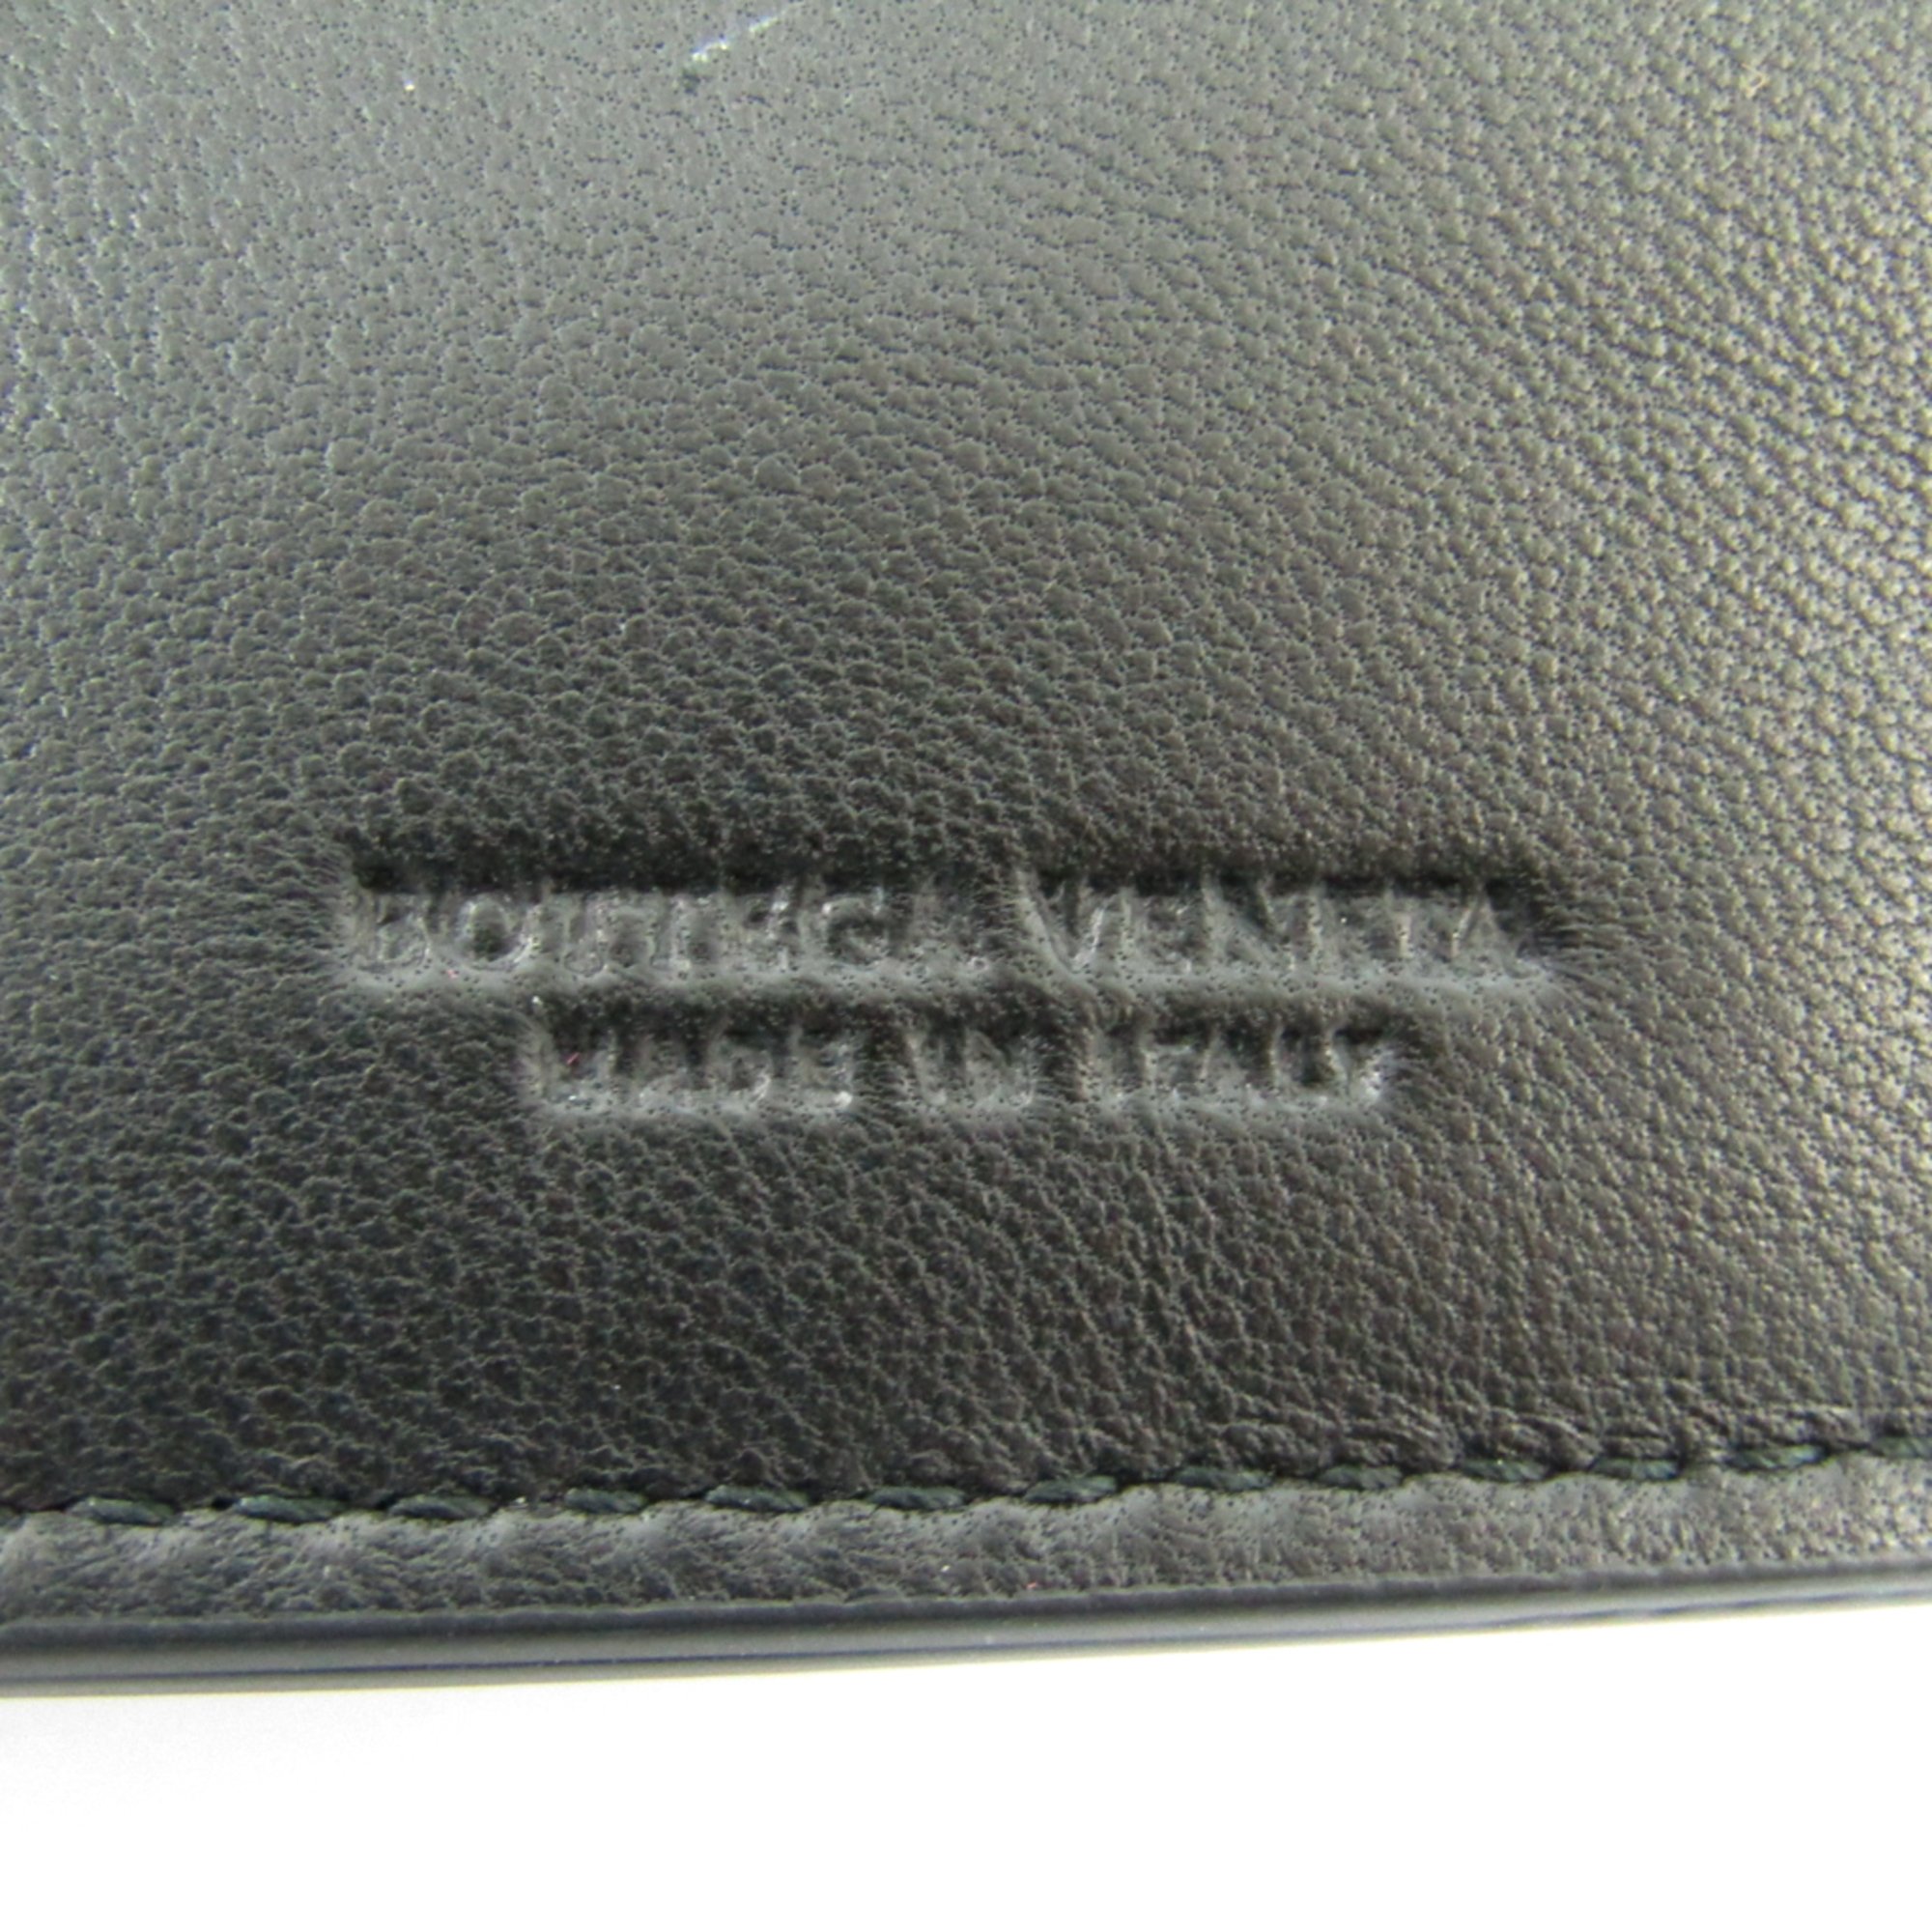 Bottega Veneta Intrecciato Unisex Leather Wallet (bi-fold) Black